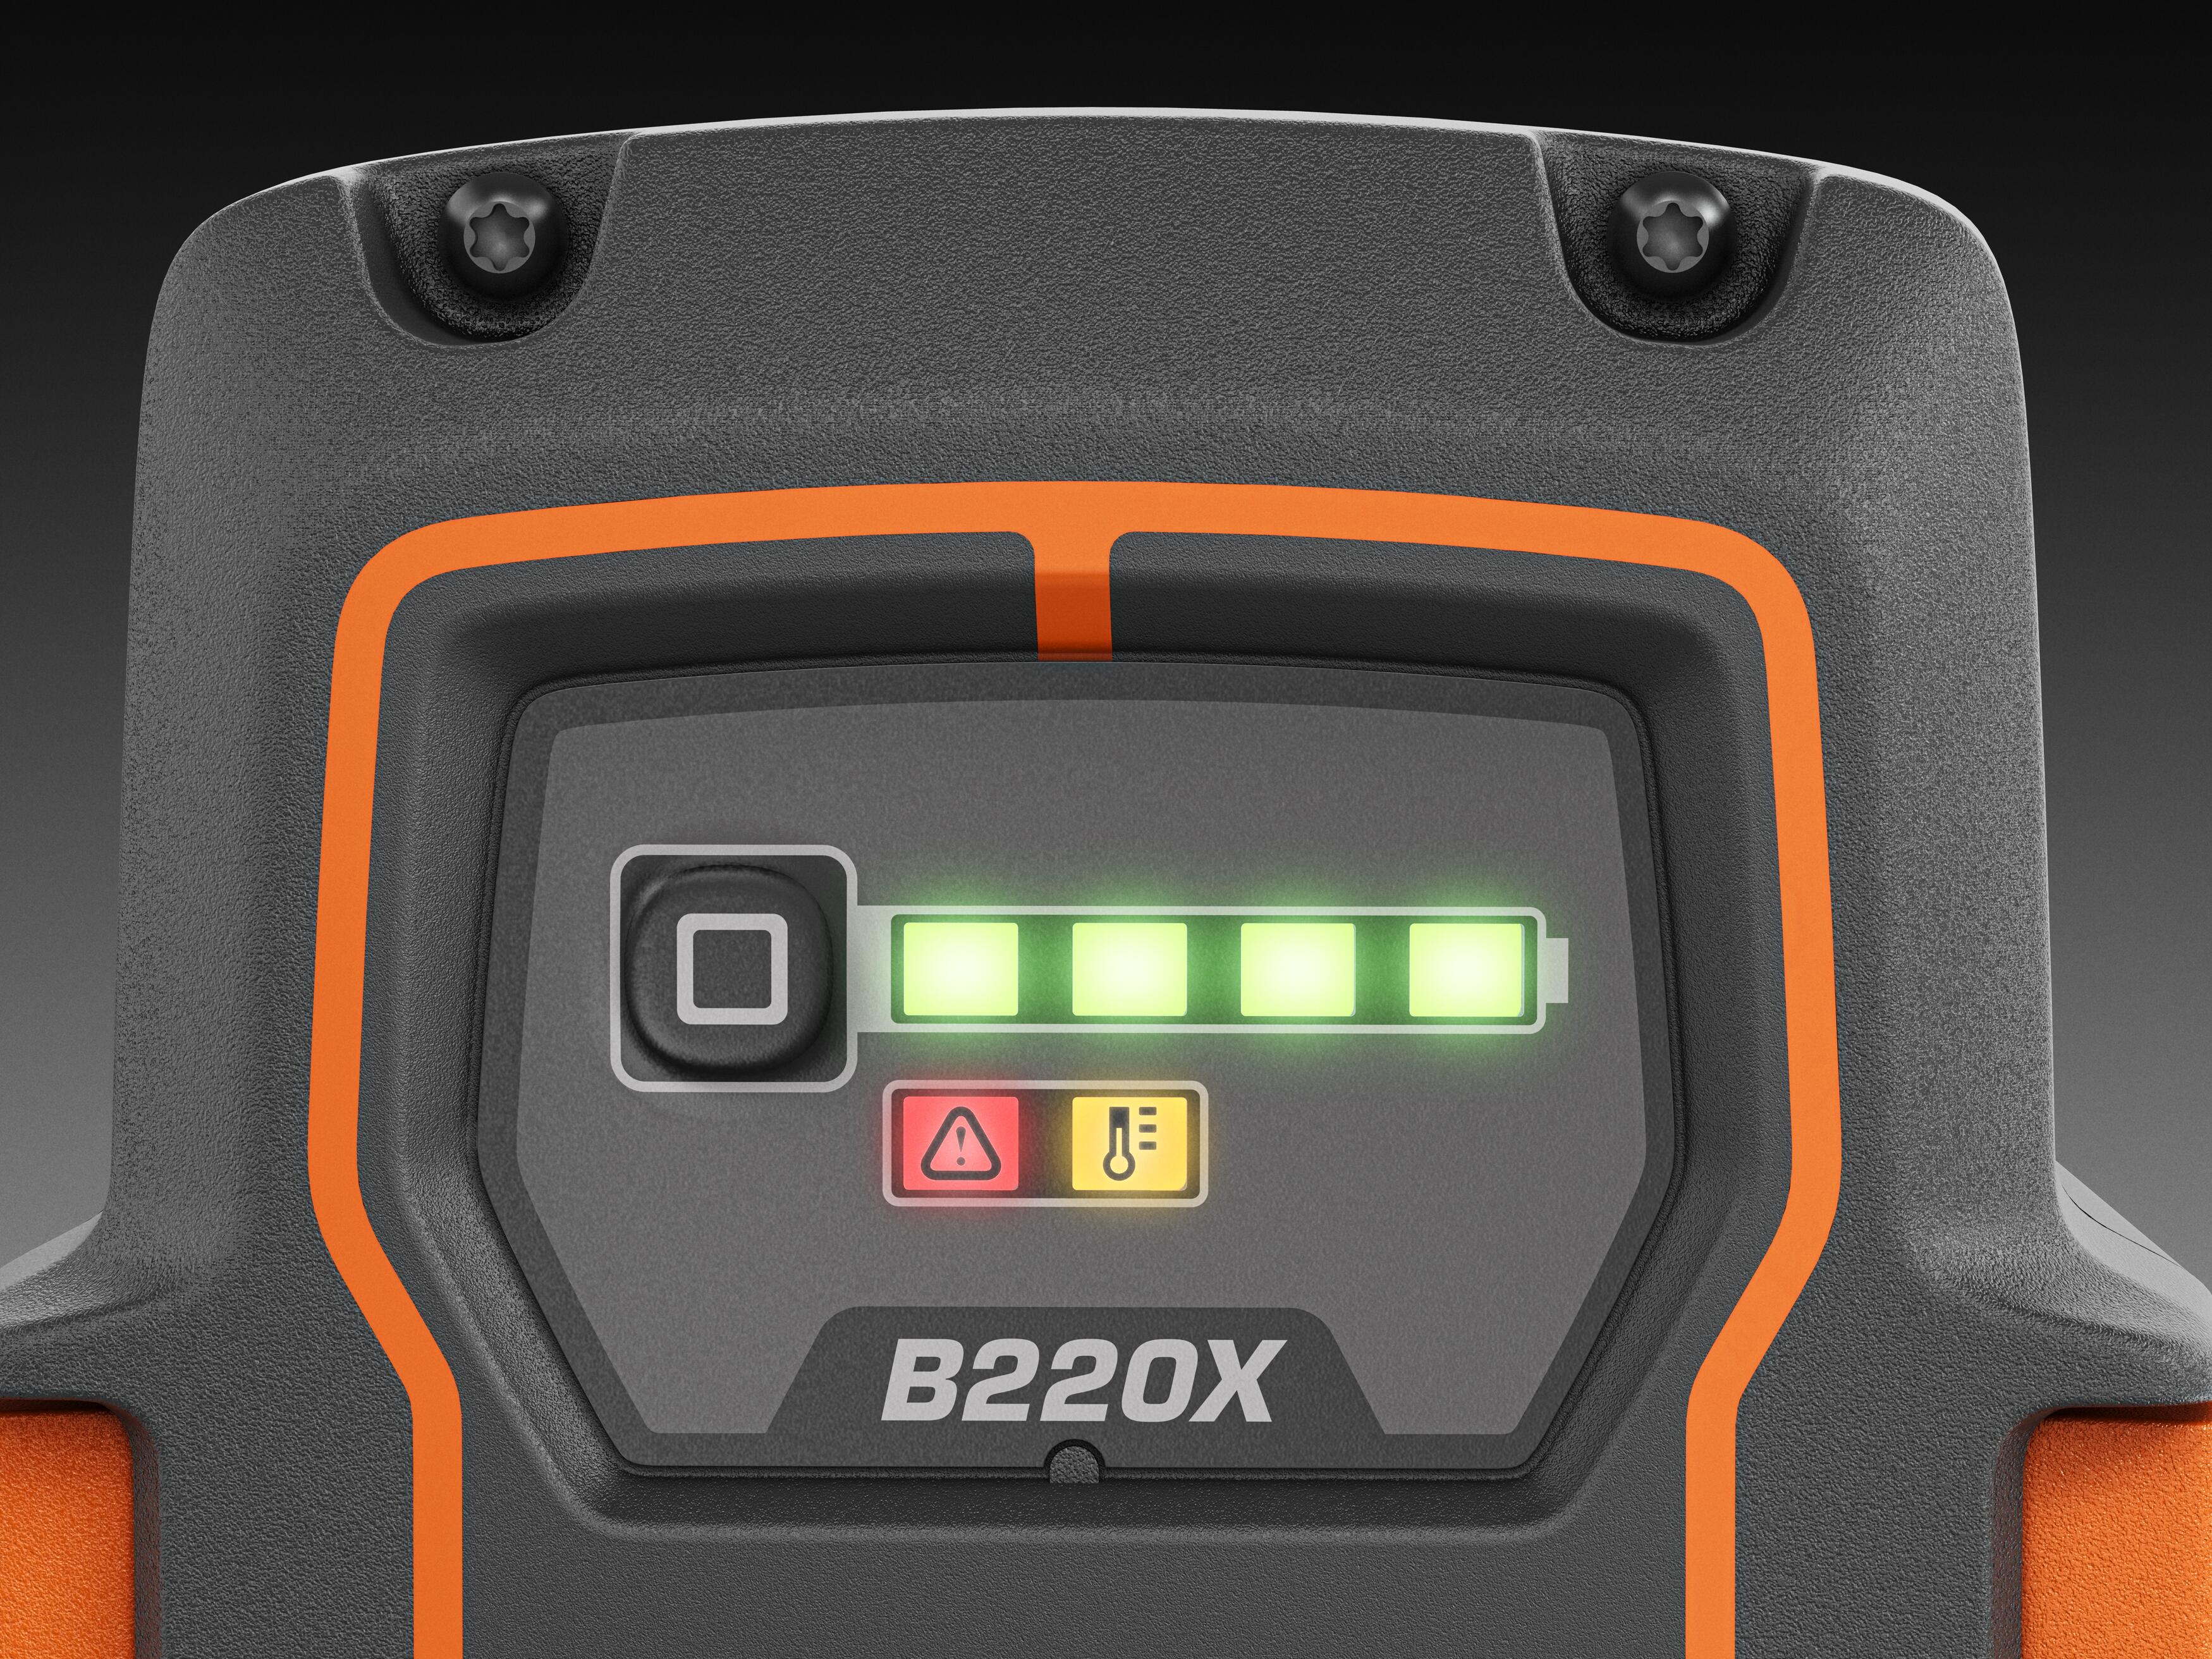 PRO batteries, Intuitive user interface, No BT